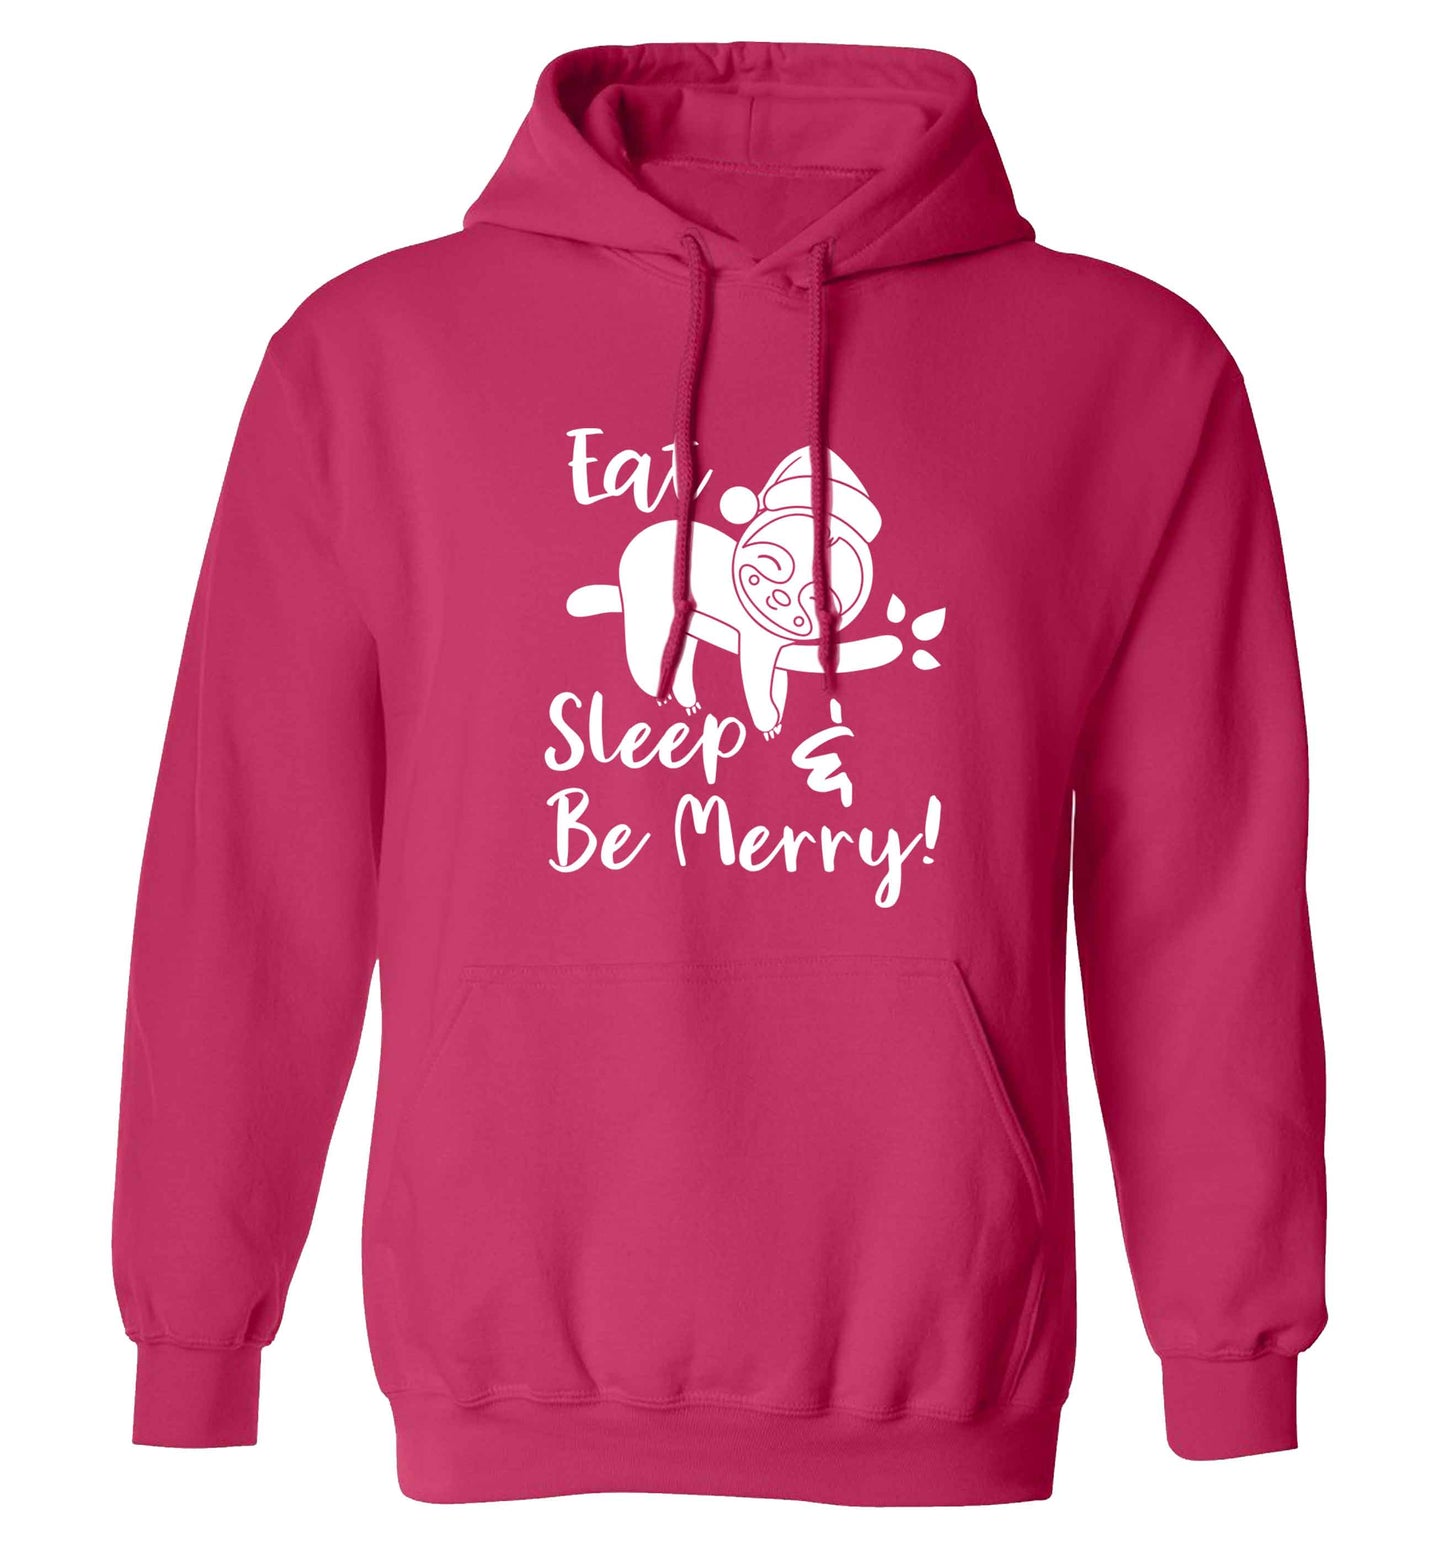 Merry Slothmas adults unisex pink hoodie 2XL